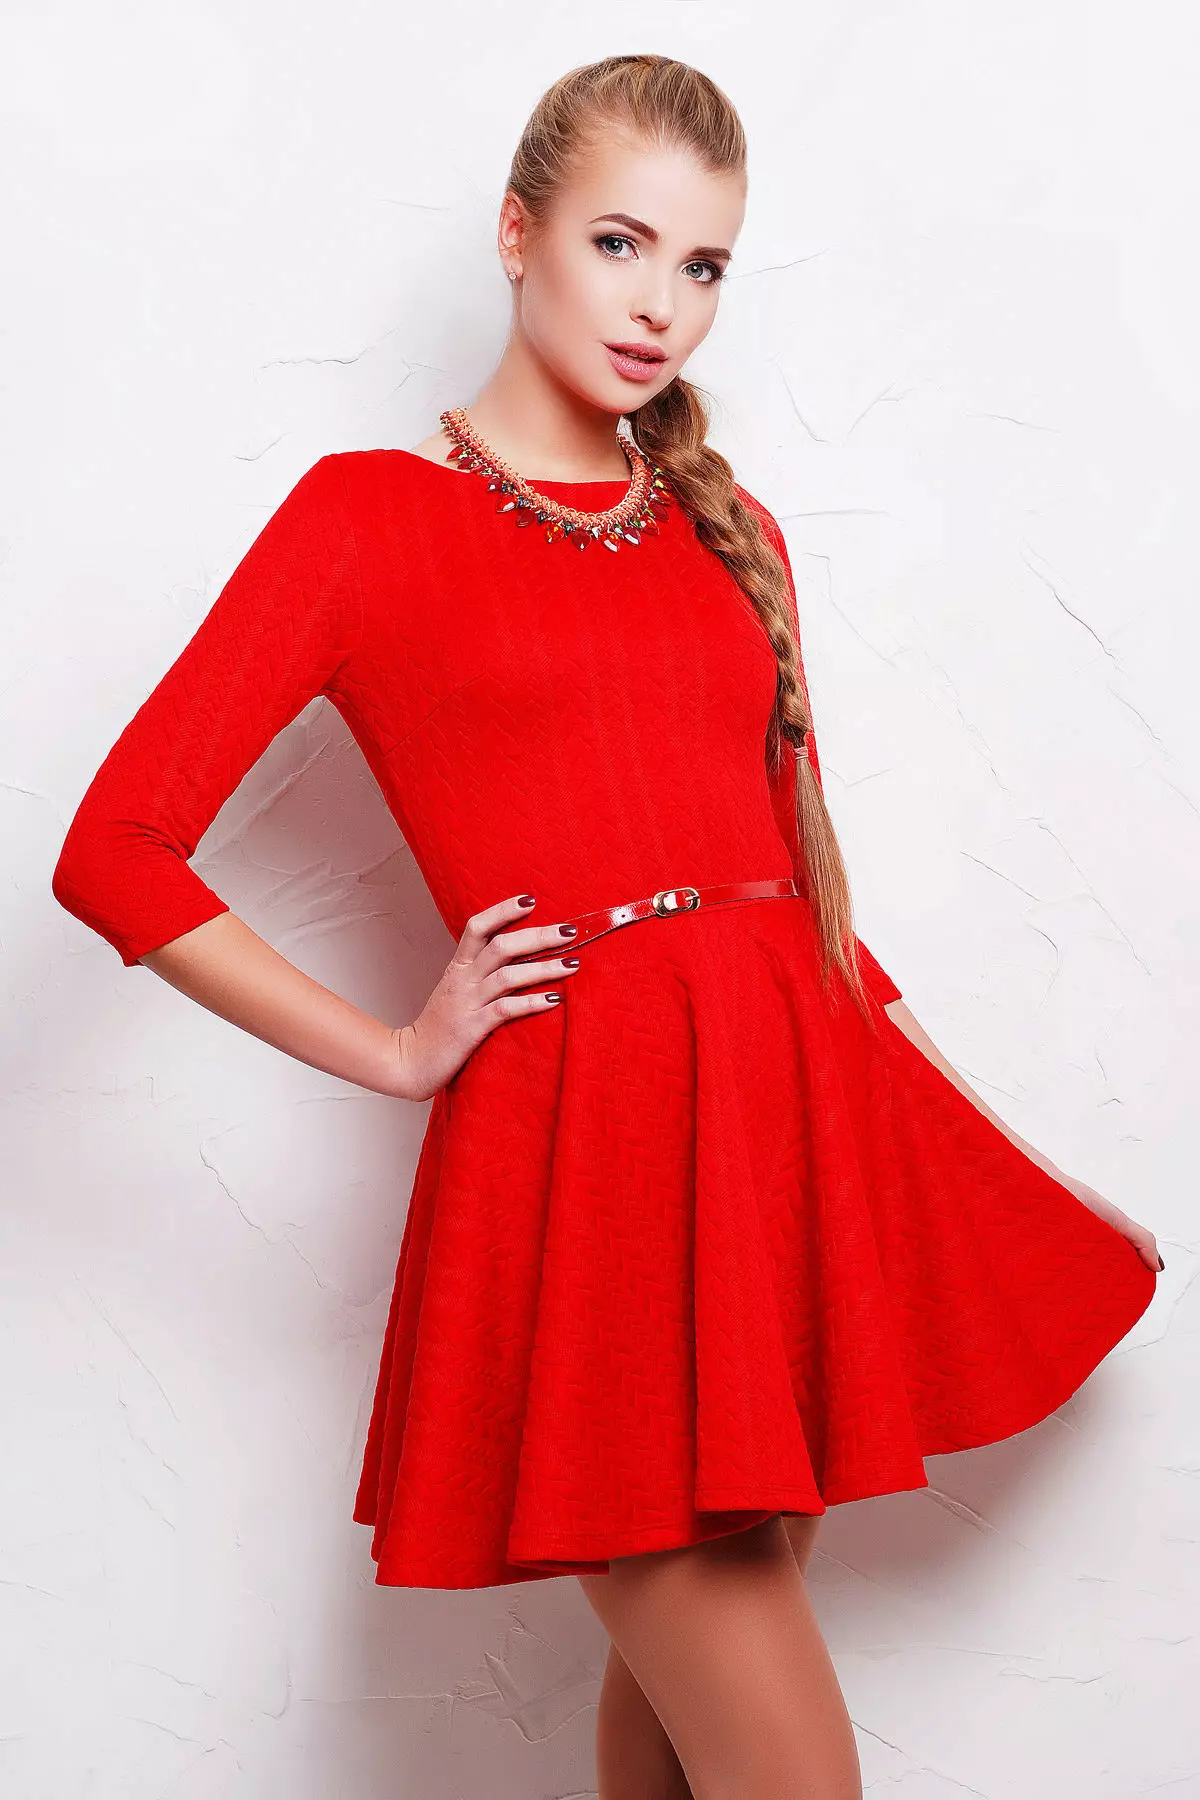 Red glush dress mula sa baywang.